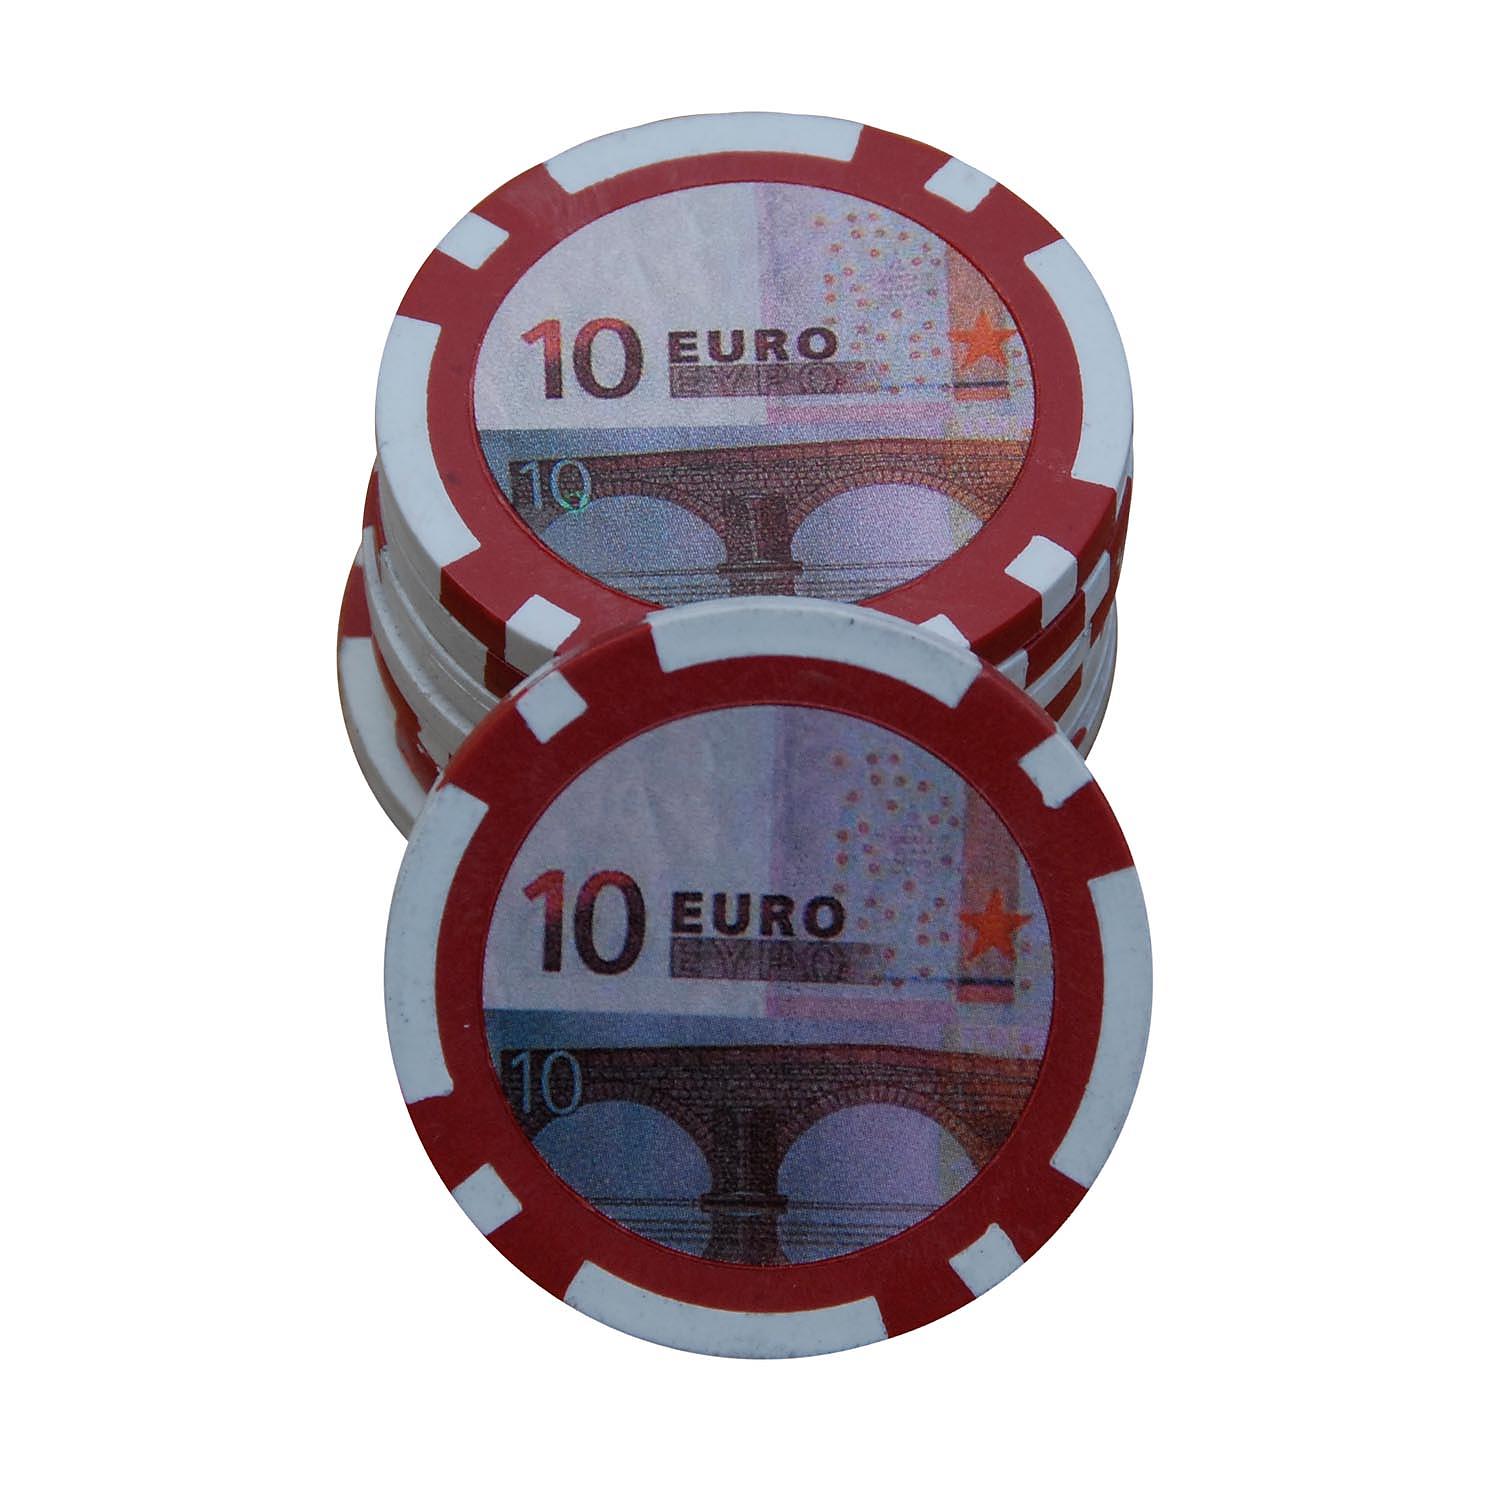 10 euro pokerchips